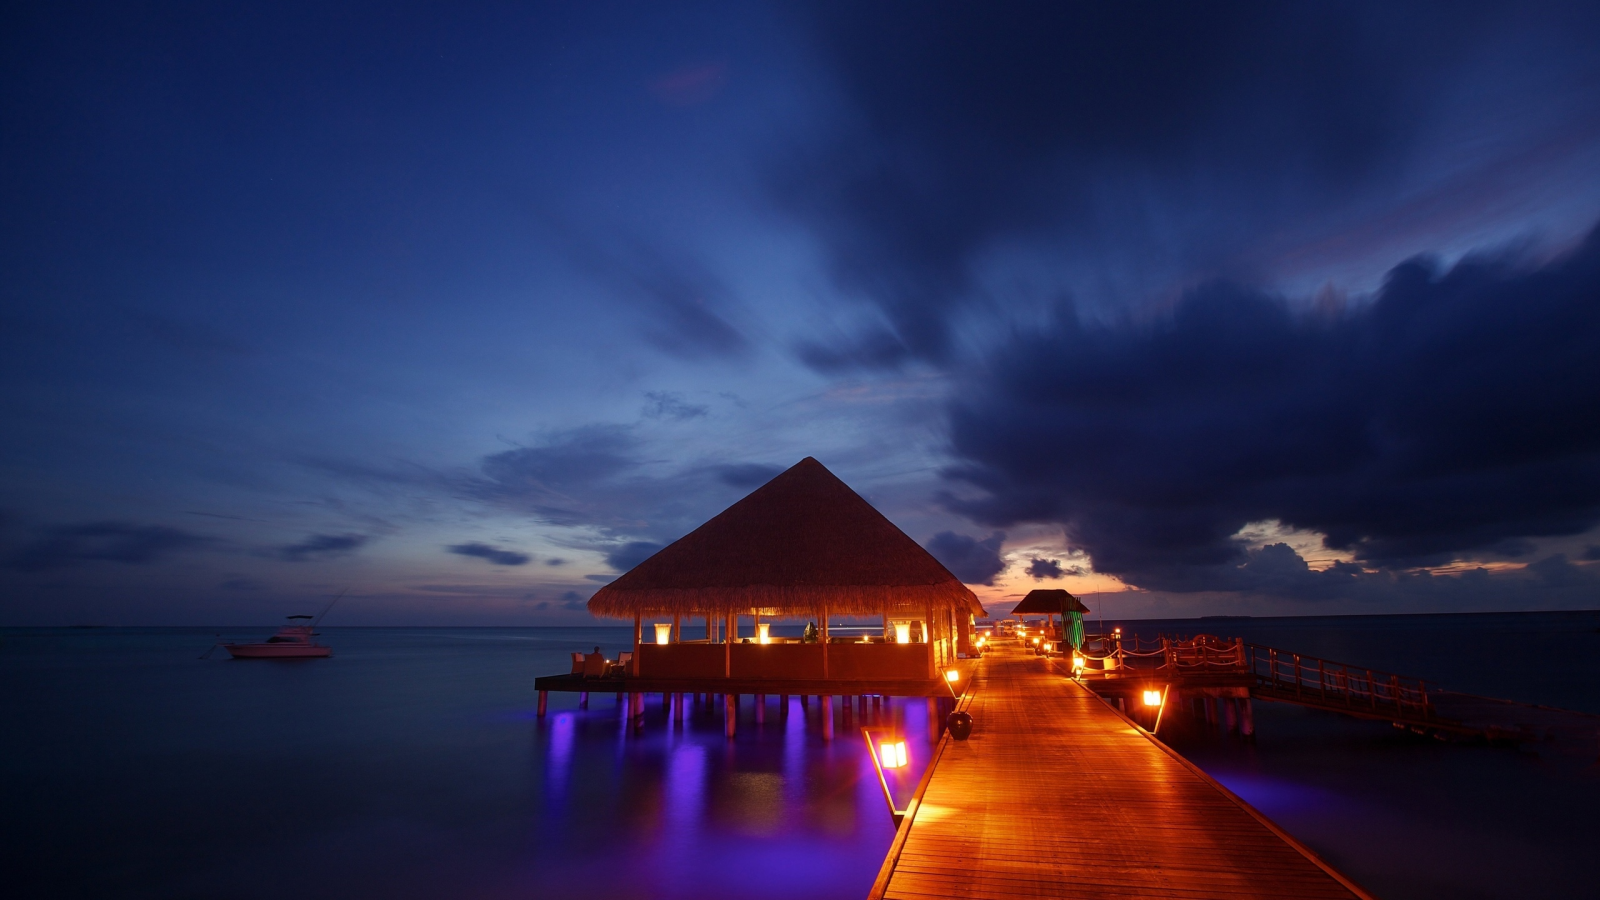 sea, night lights, ocean, tropical, sunset, бунгало, bungalow, beach, maldives, пирс